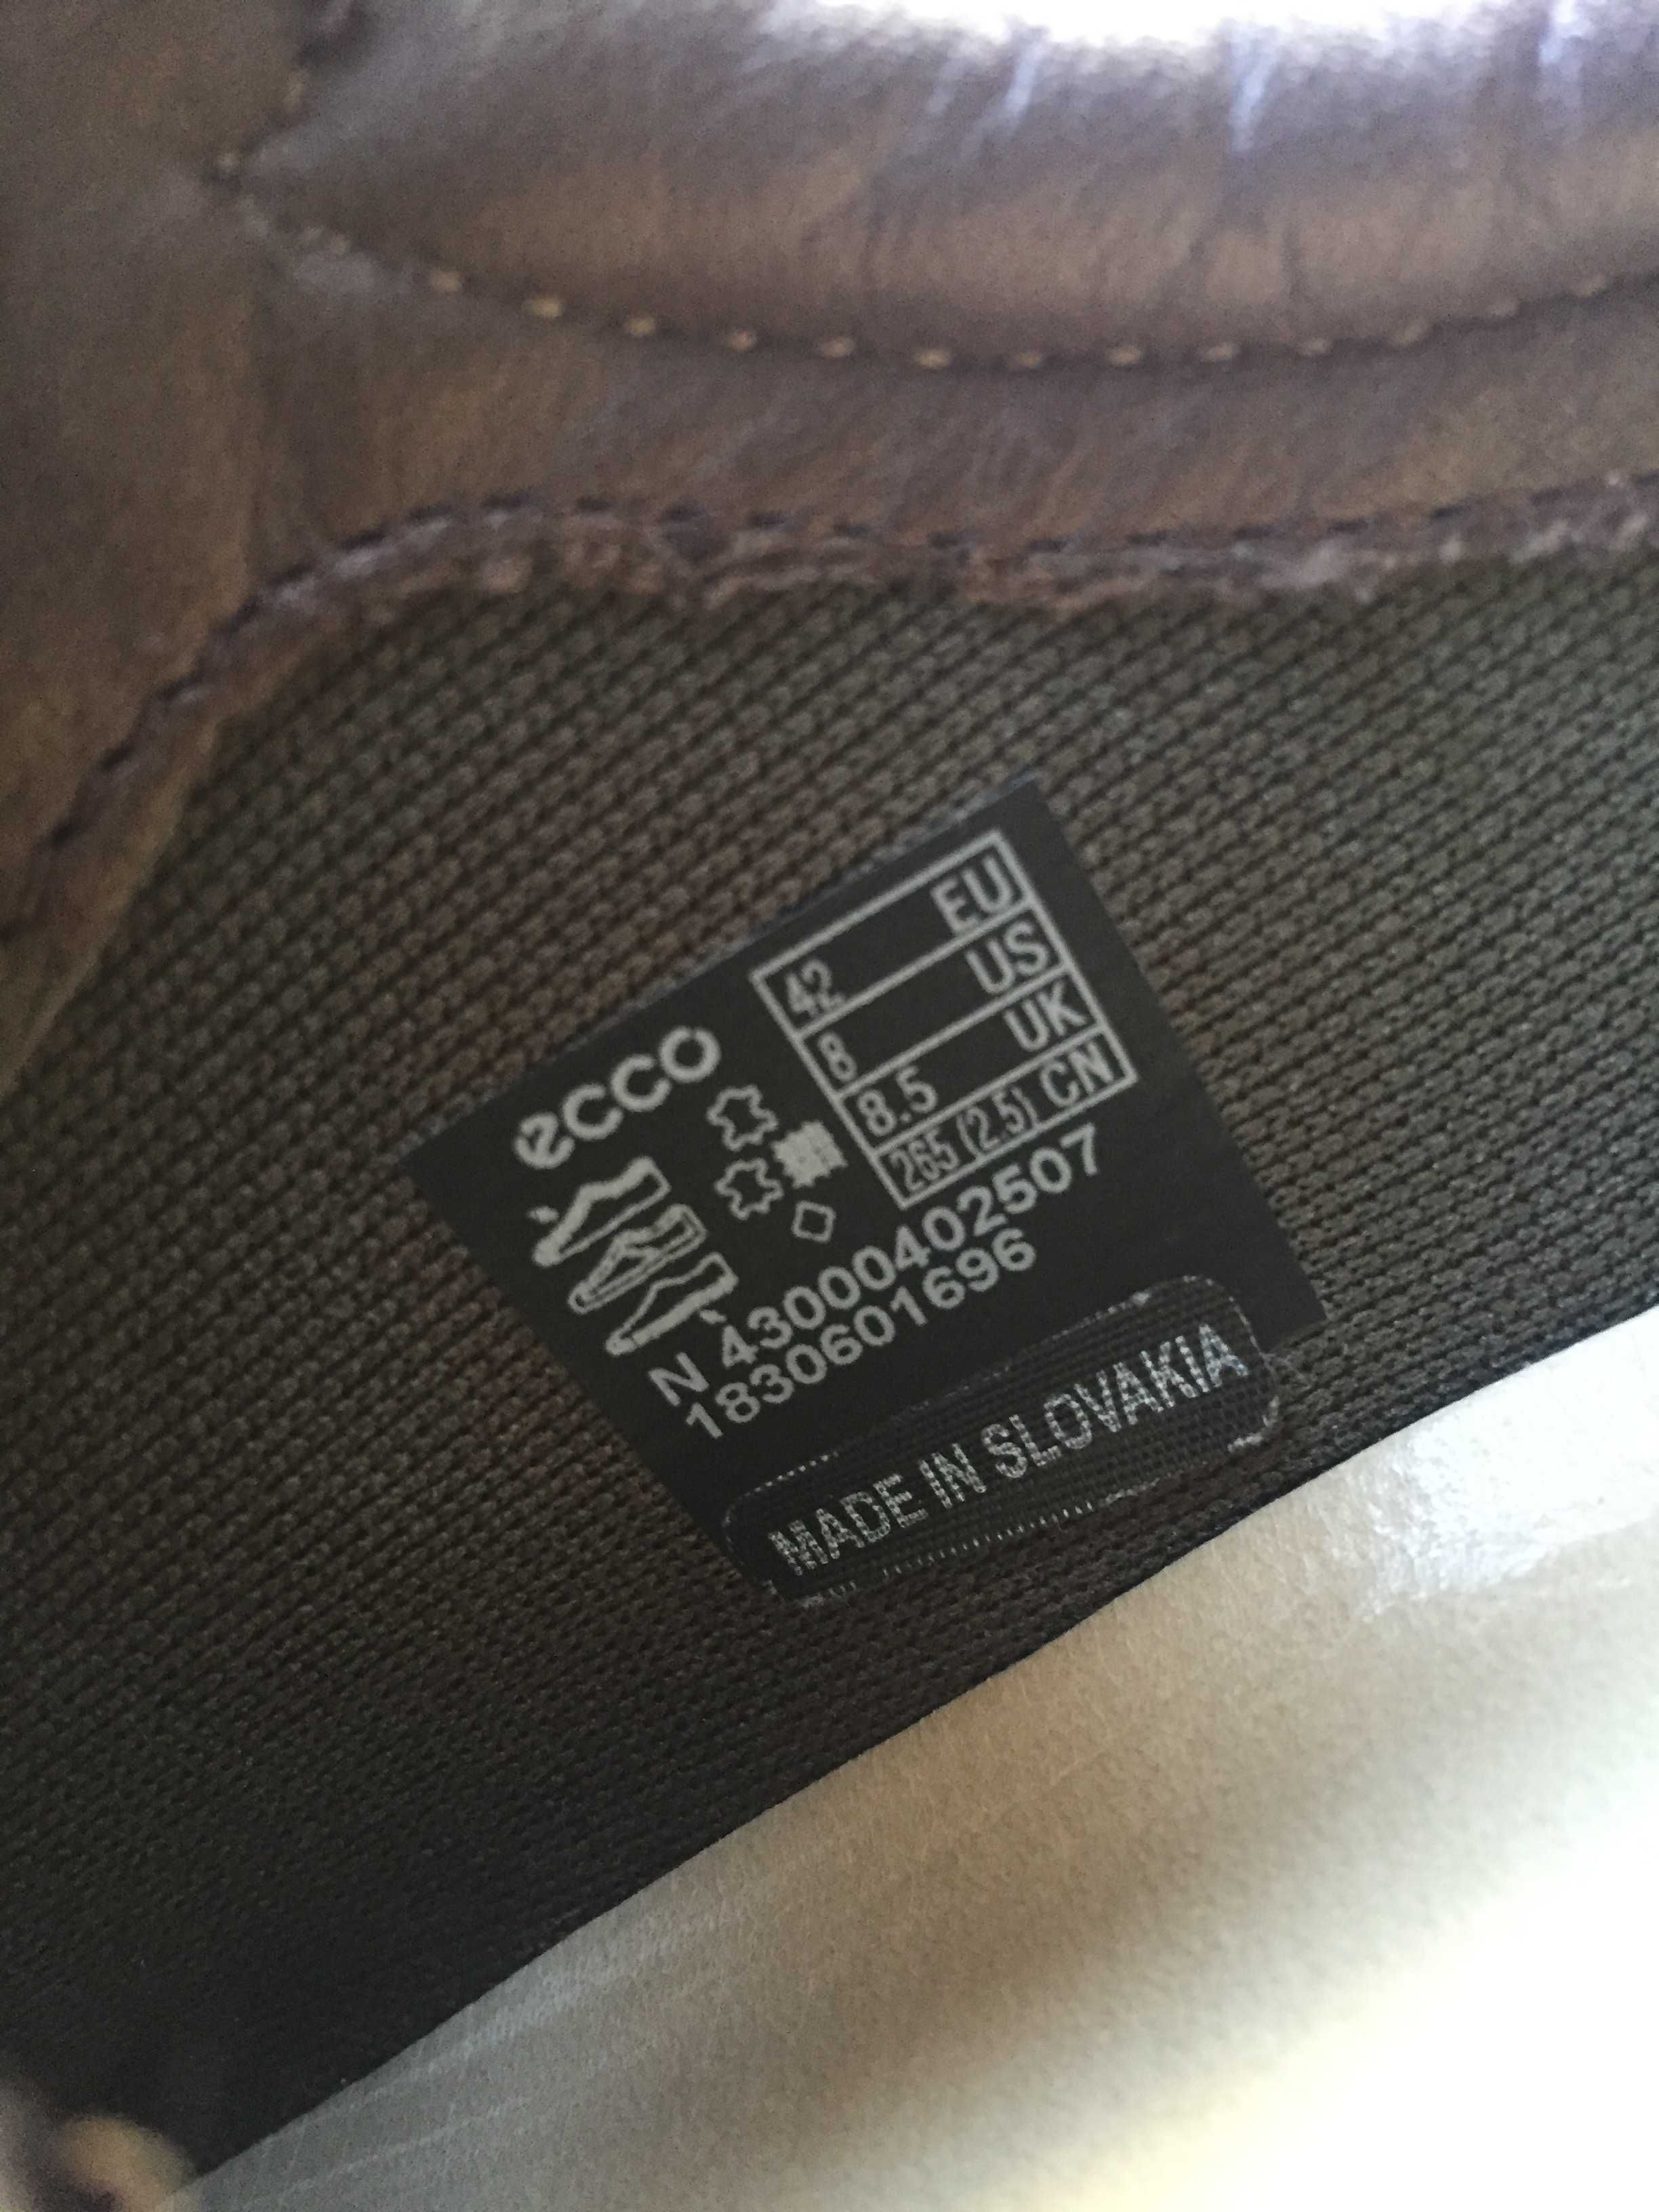 Обувь ECCO SOFT р42